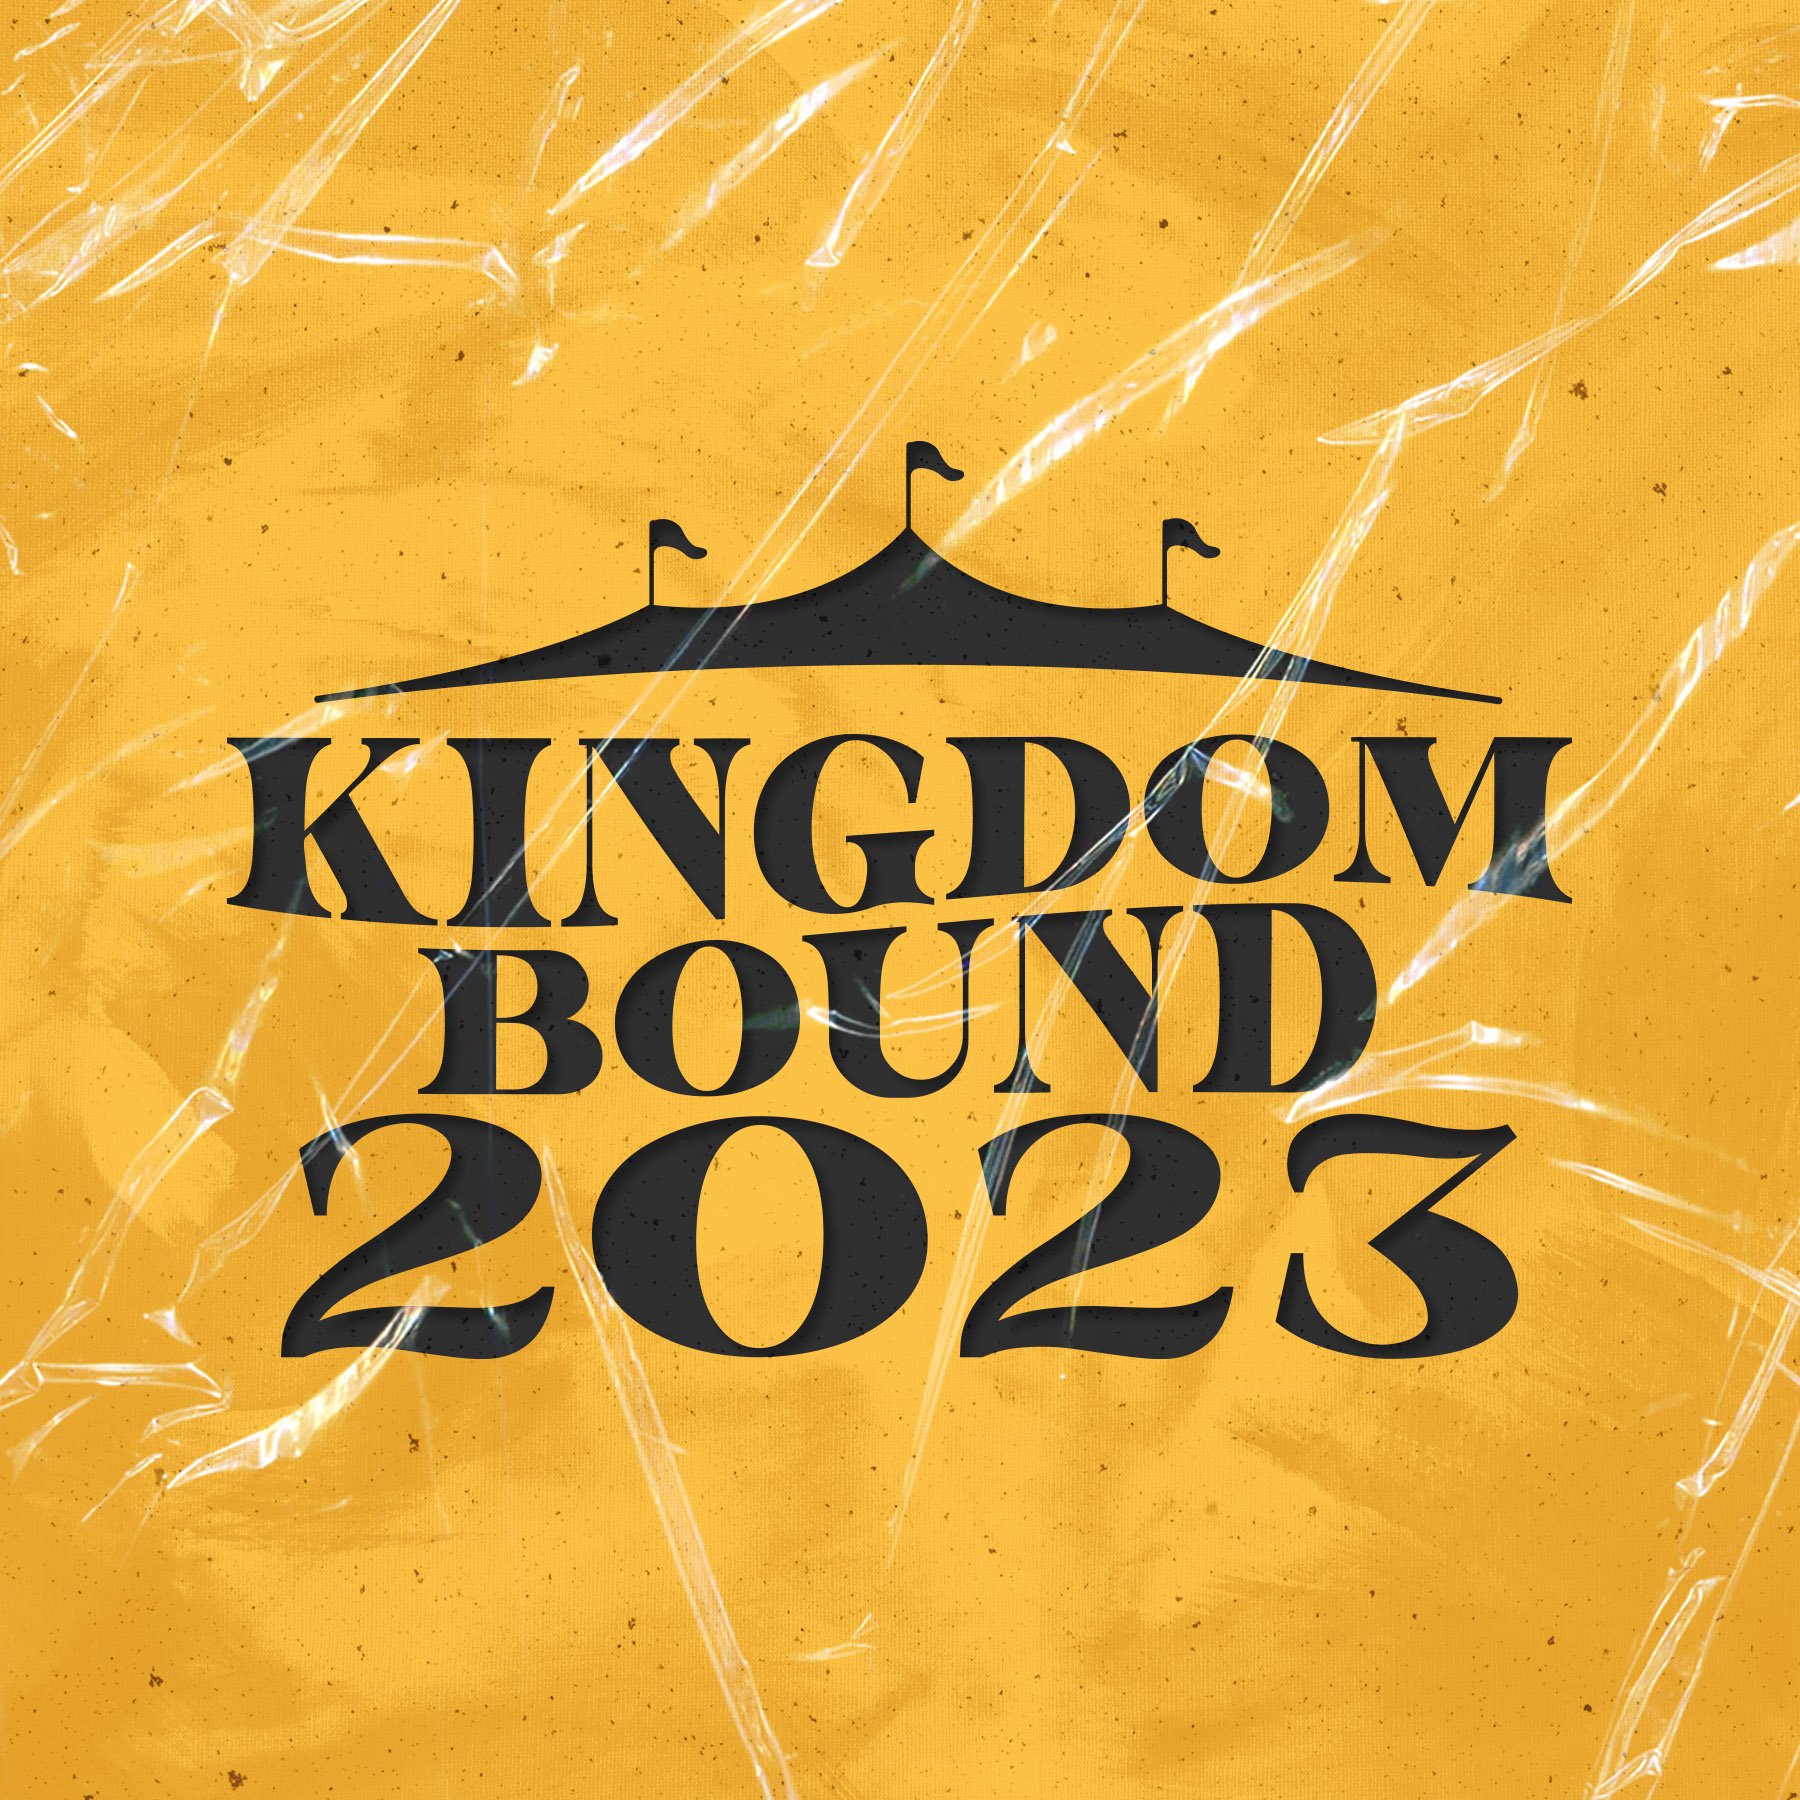 Kingdom Bound Festival